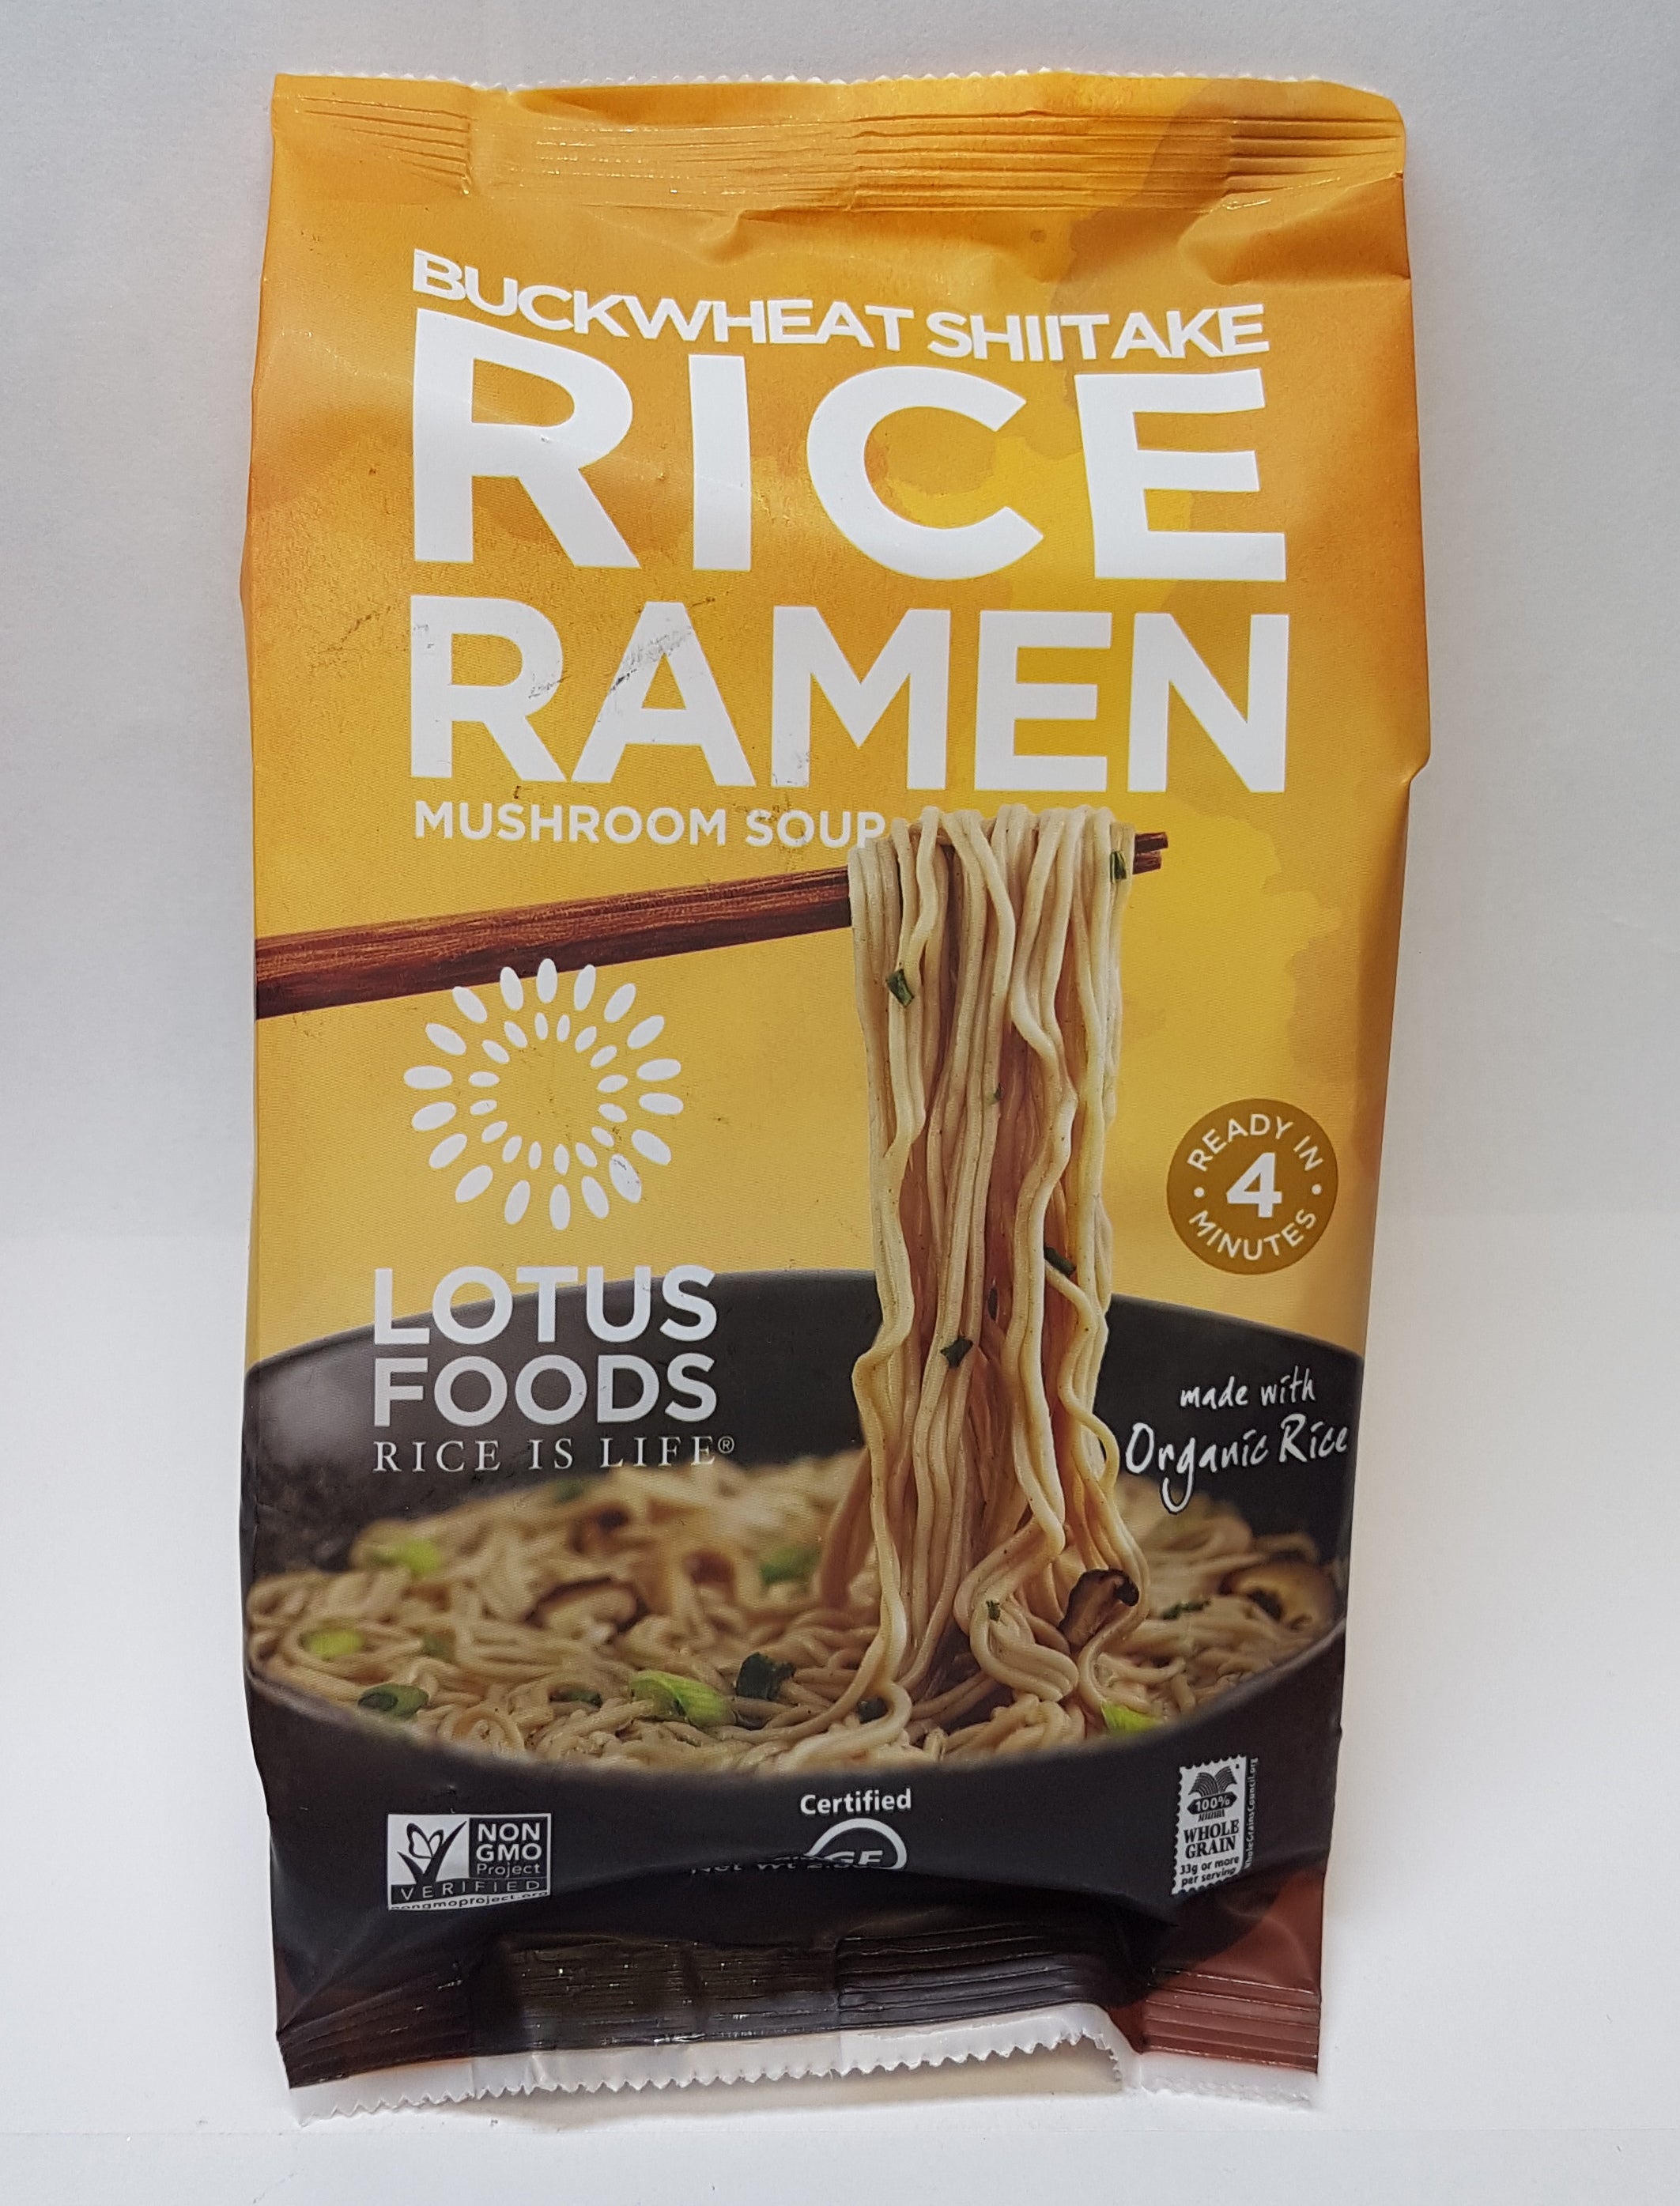 Lotus Foods Buckwheat Shiitake Rice Ramen Mushroom Soup (80g) - Lifestyle Markets